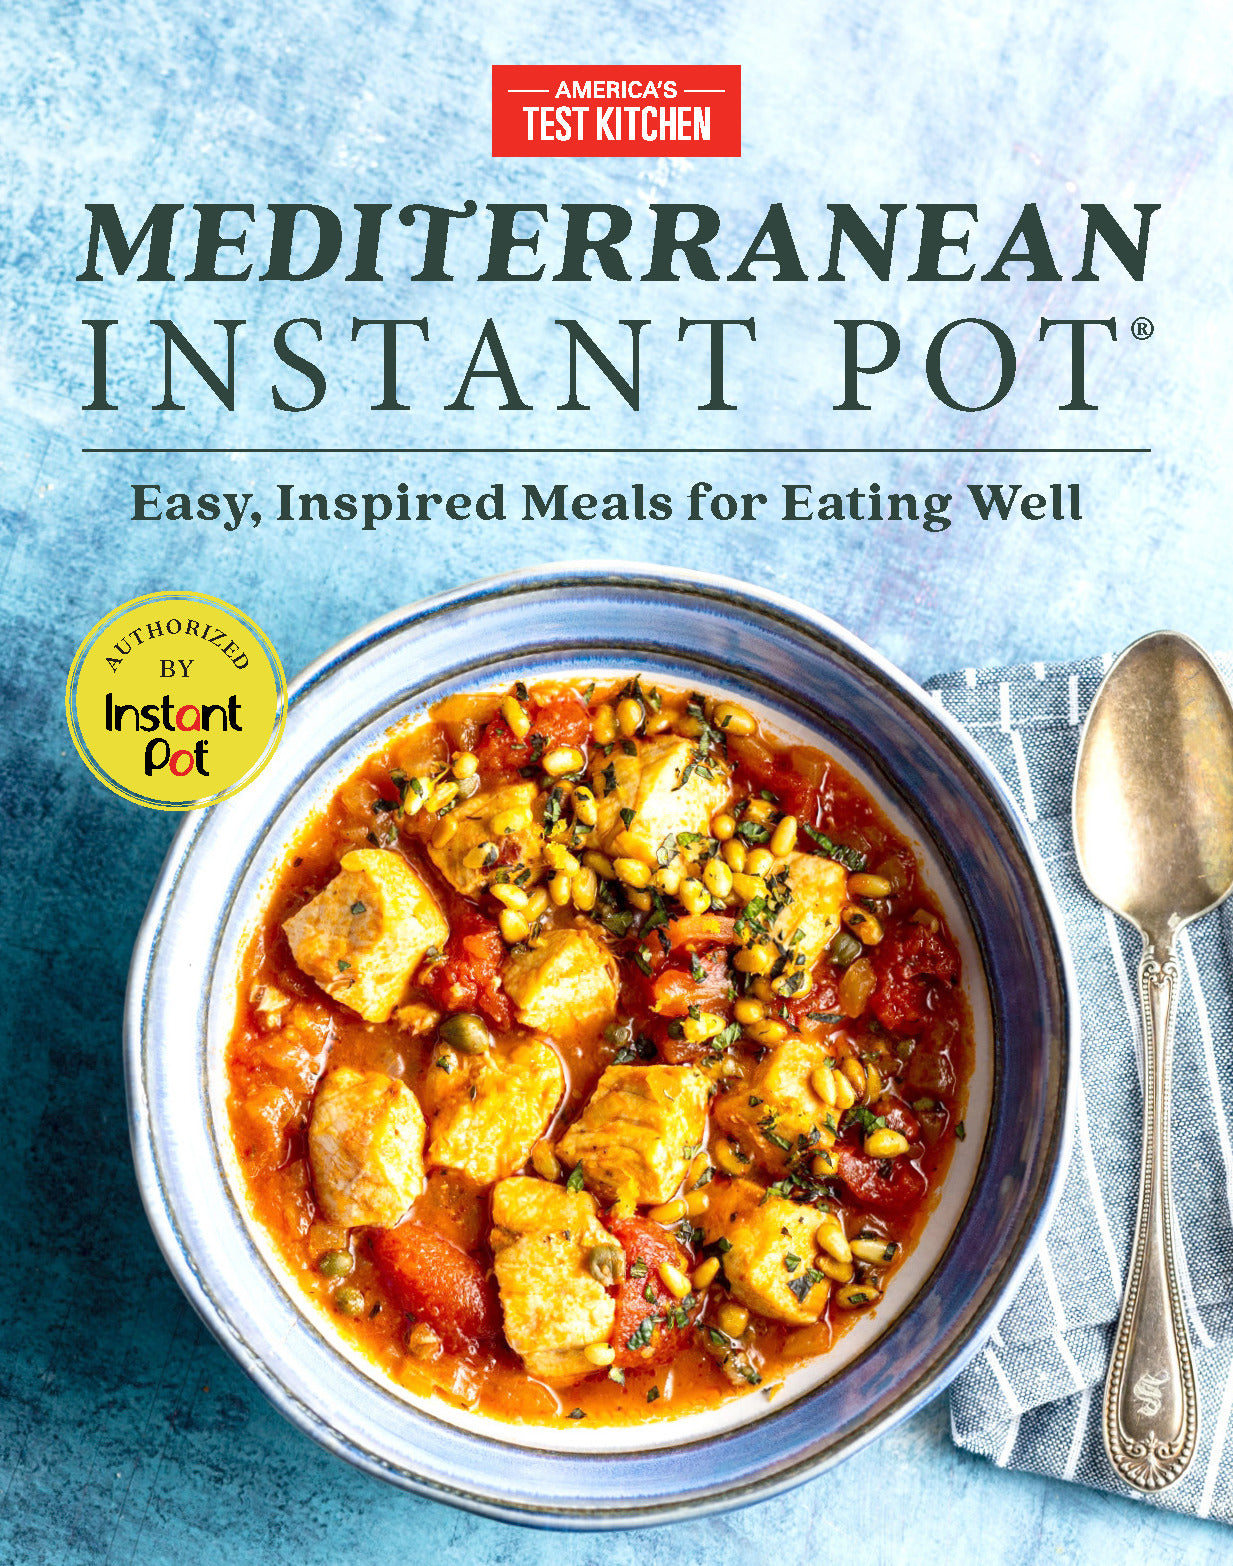 Mediterranean Instant Pot